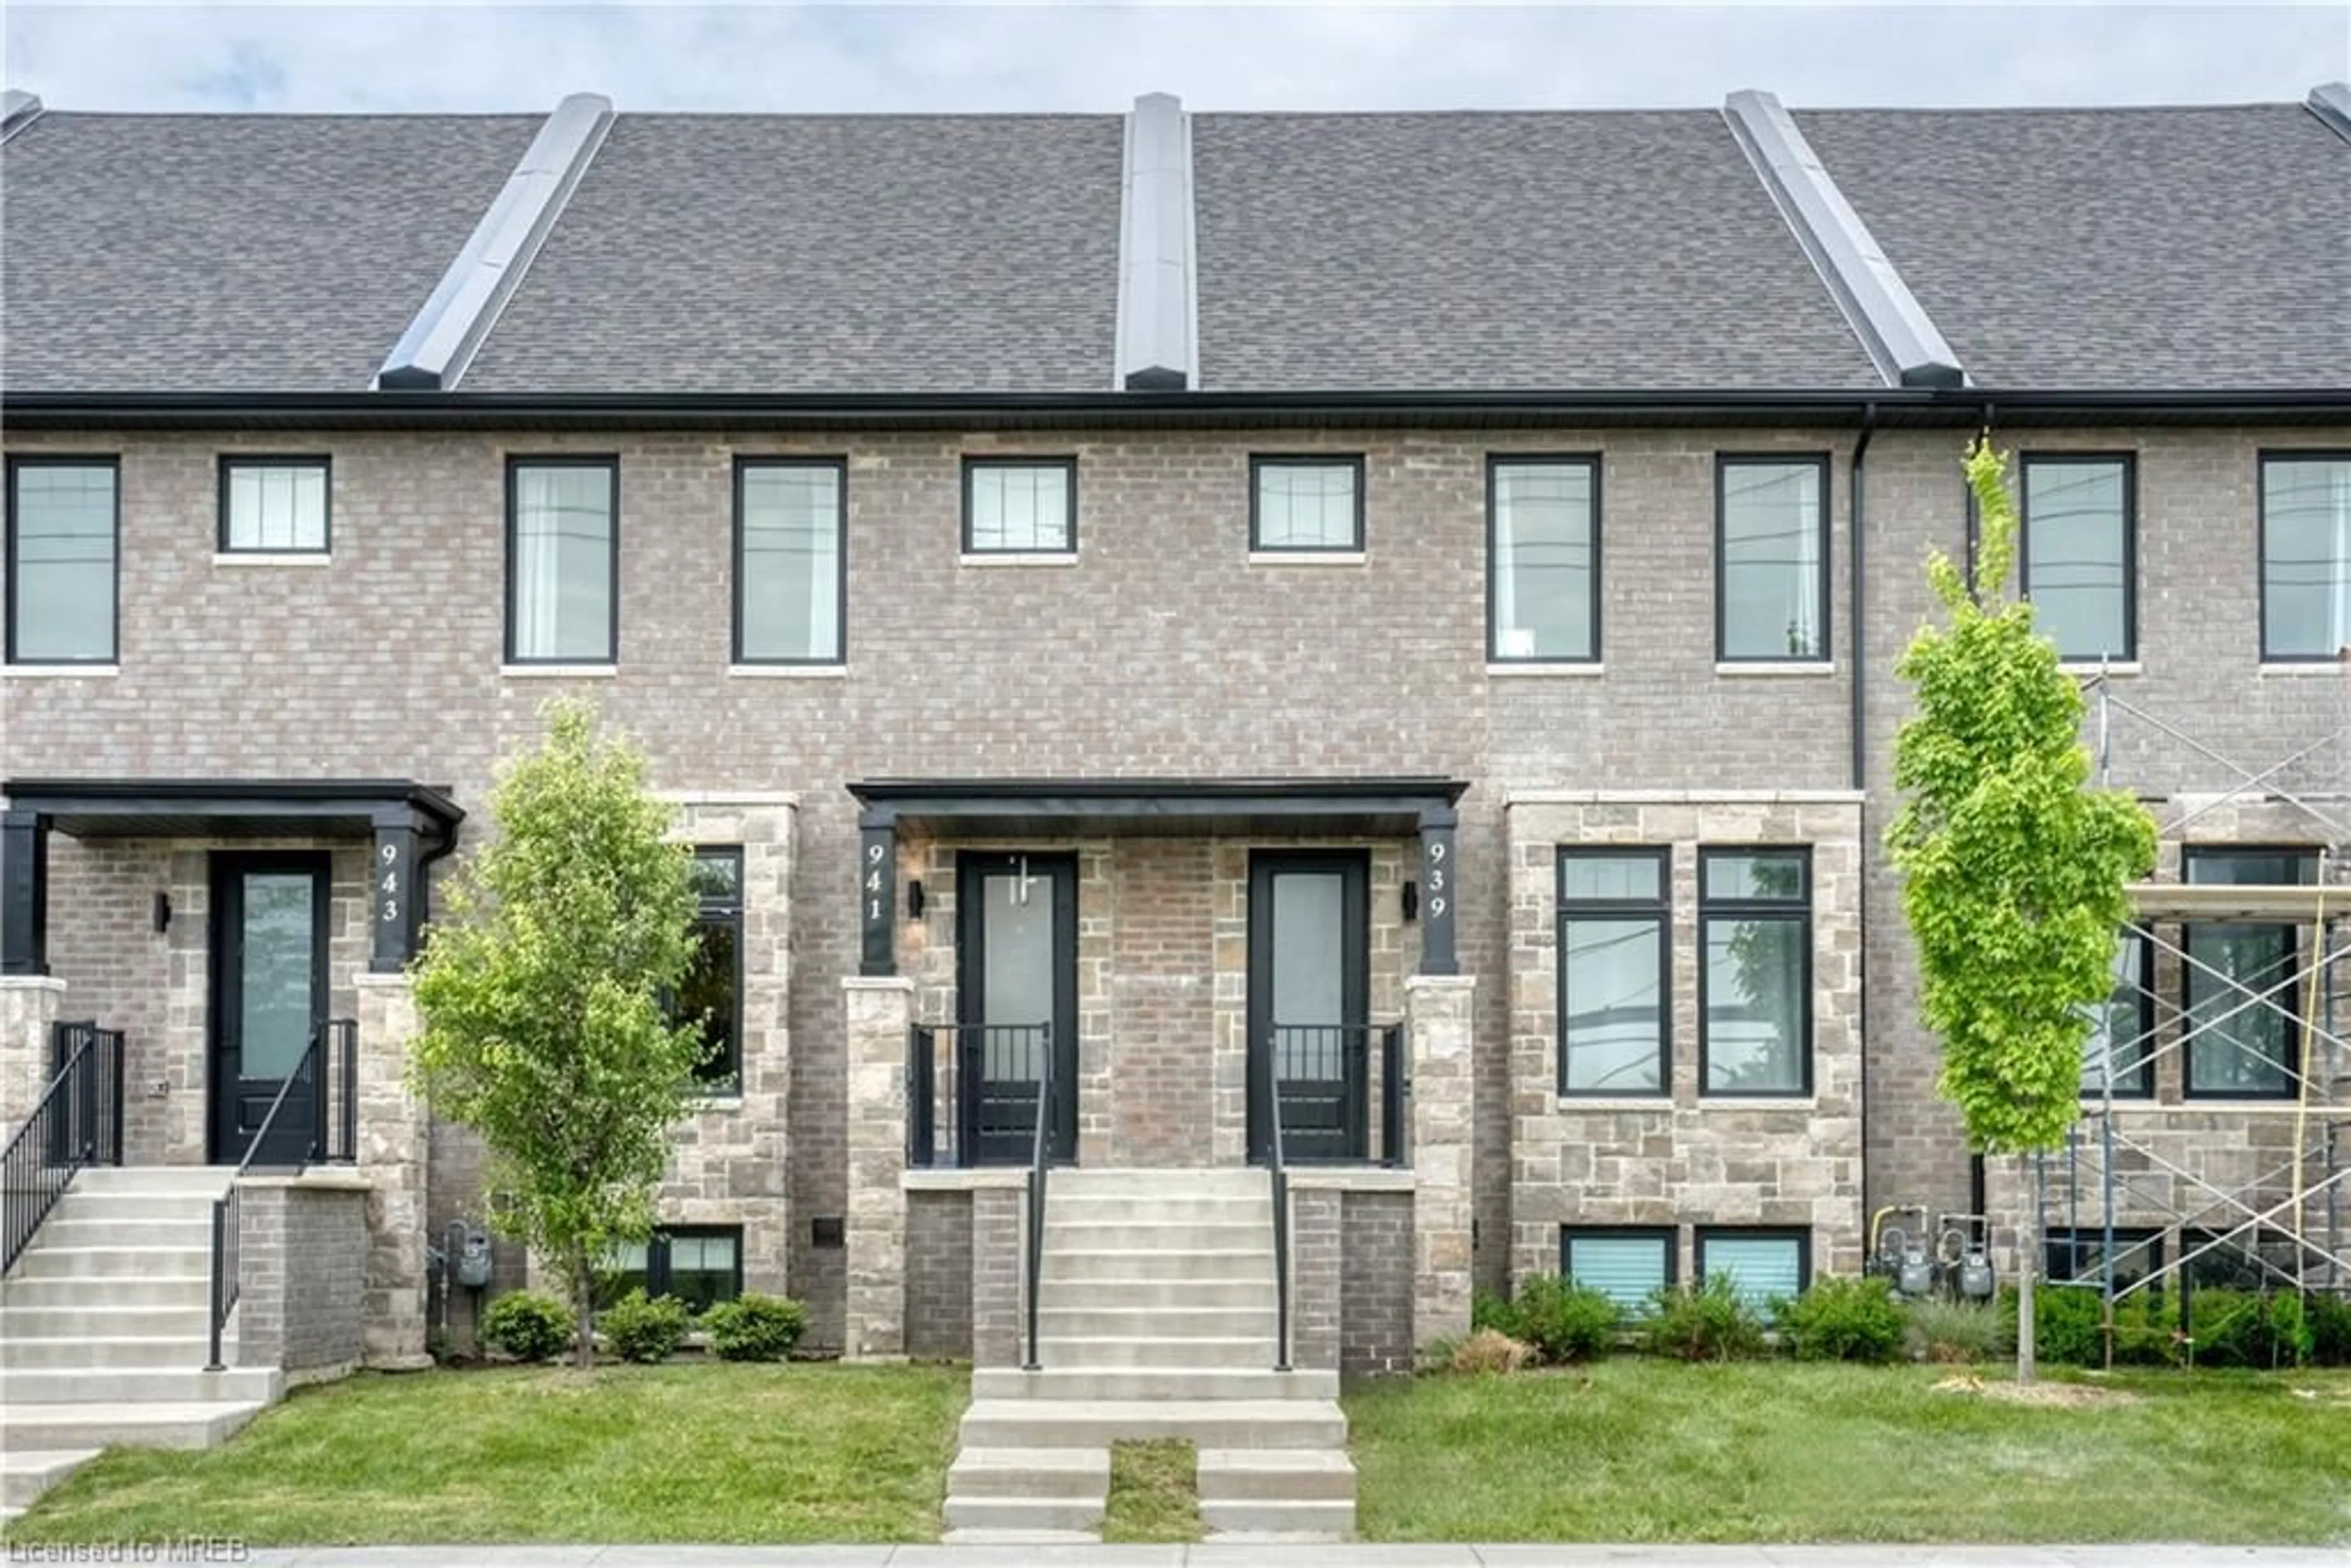 Home with brick exterior material for 941 Walker Rd, Windsor Ontario N8Y 2N6